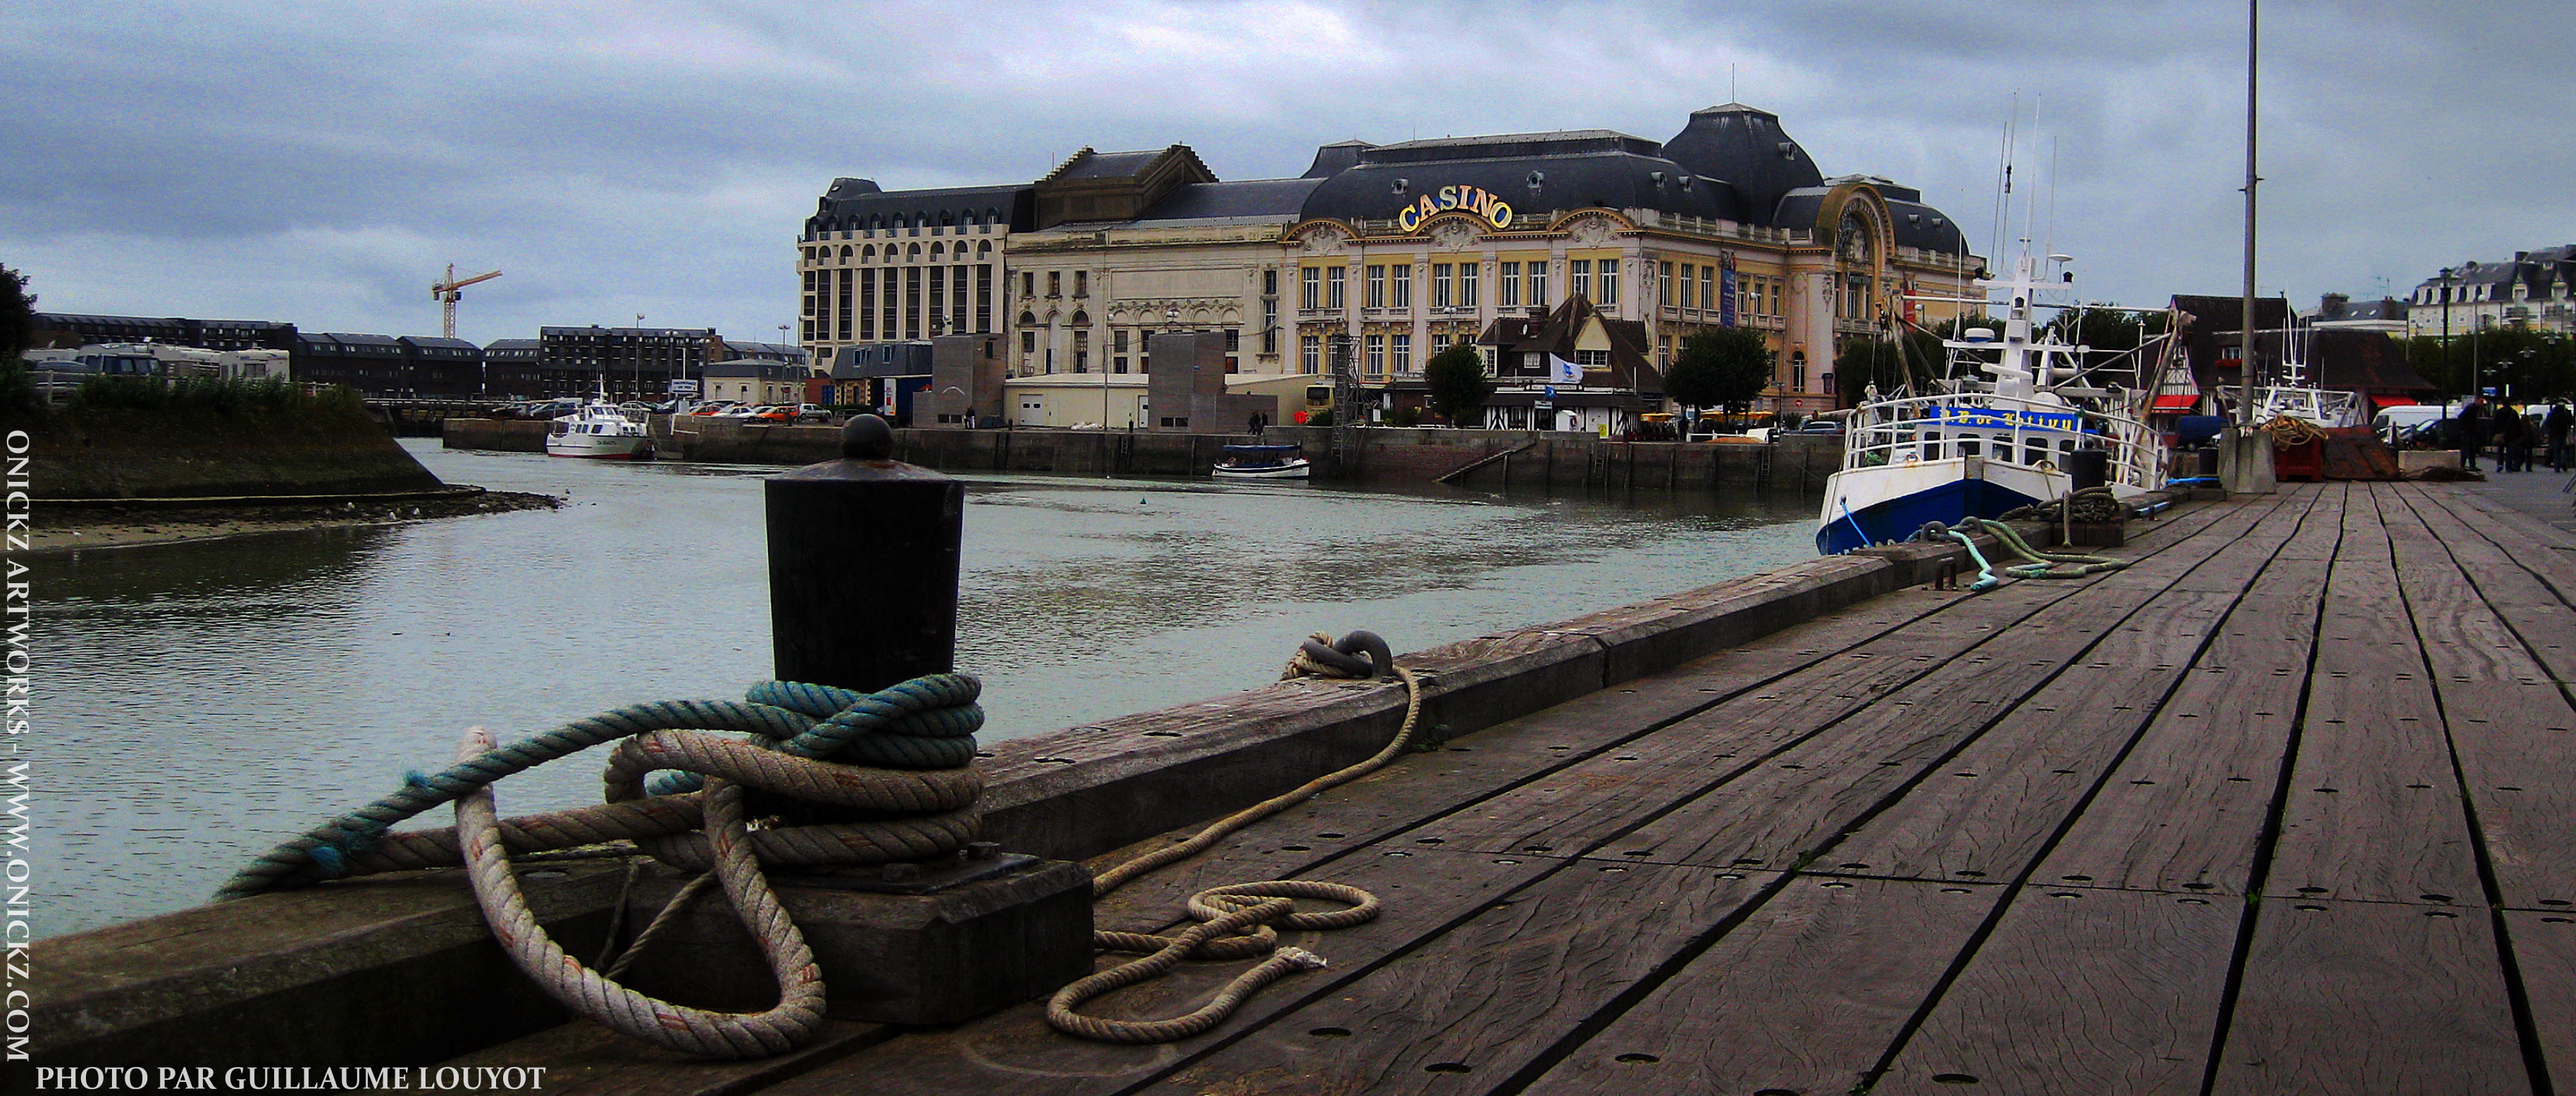 Deauville dock